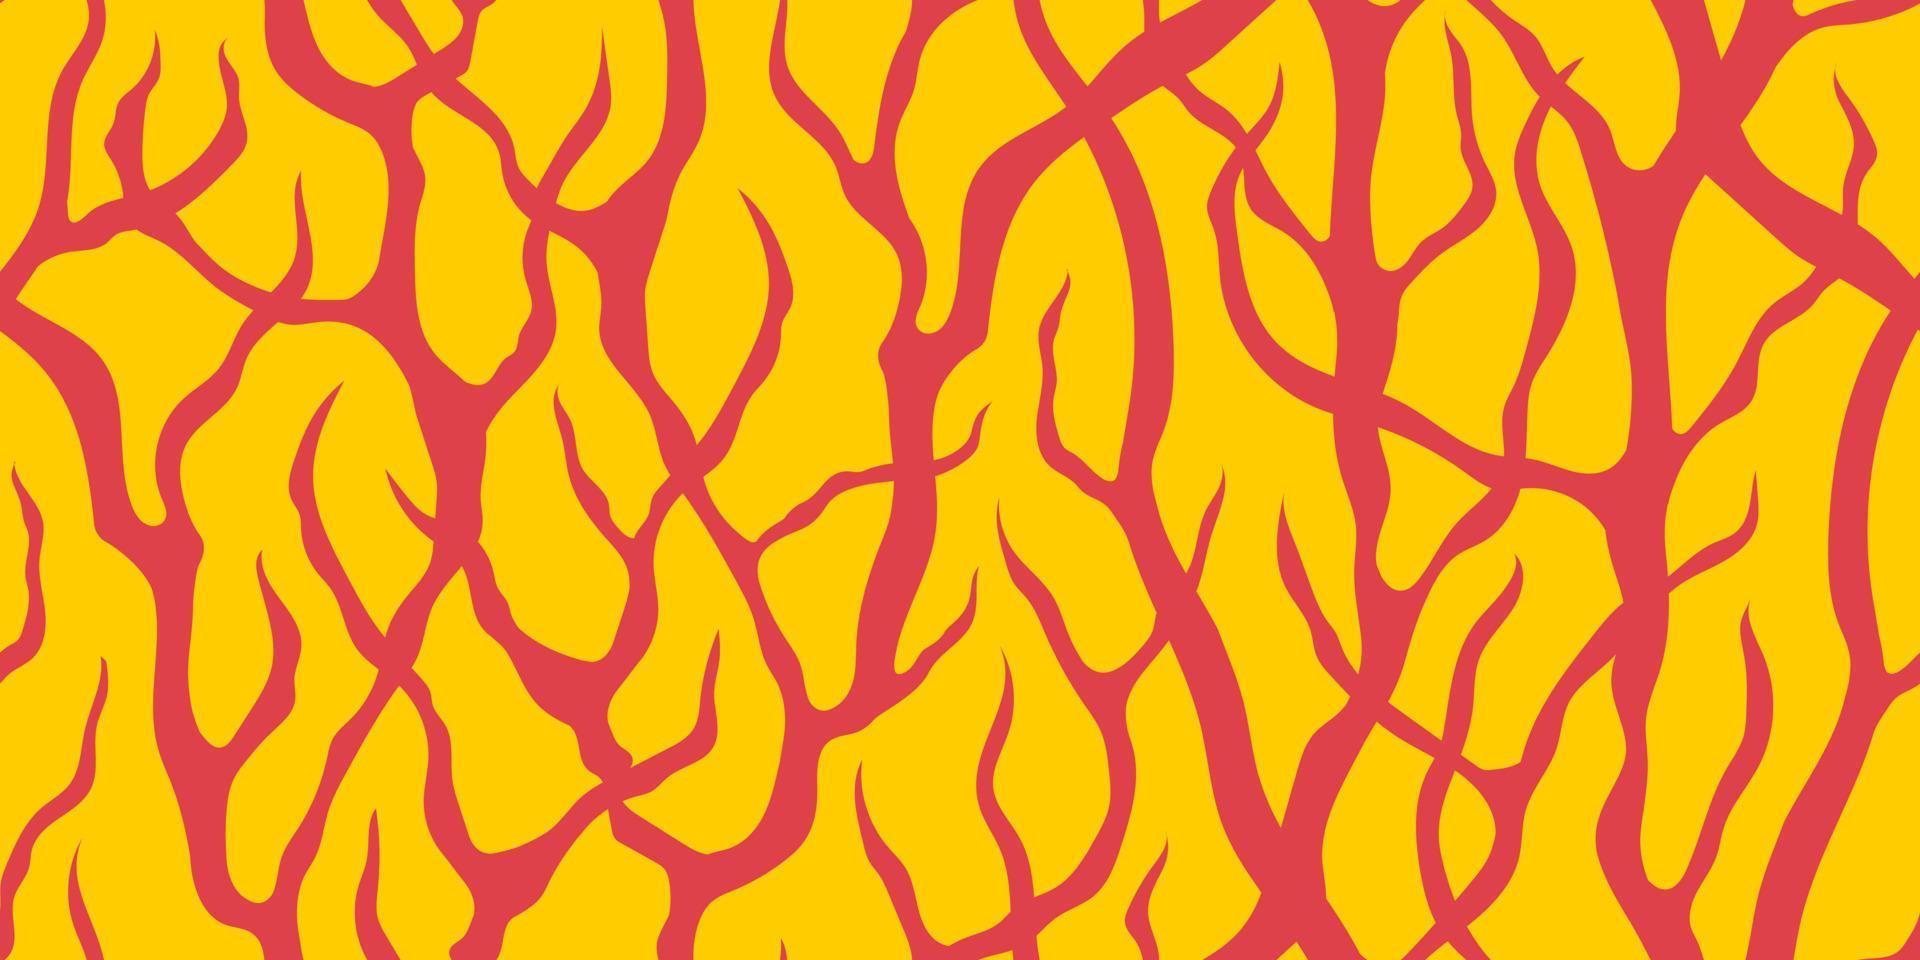 banner amarillo transparente vectorial abstracto con matorrales rosas de ramas de árboles vector